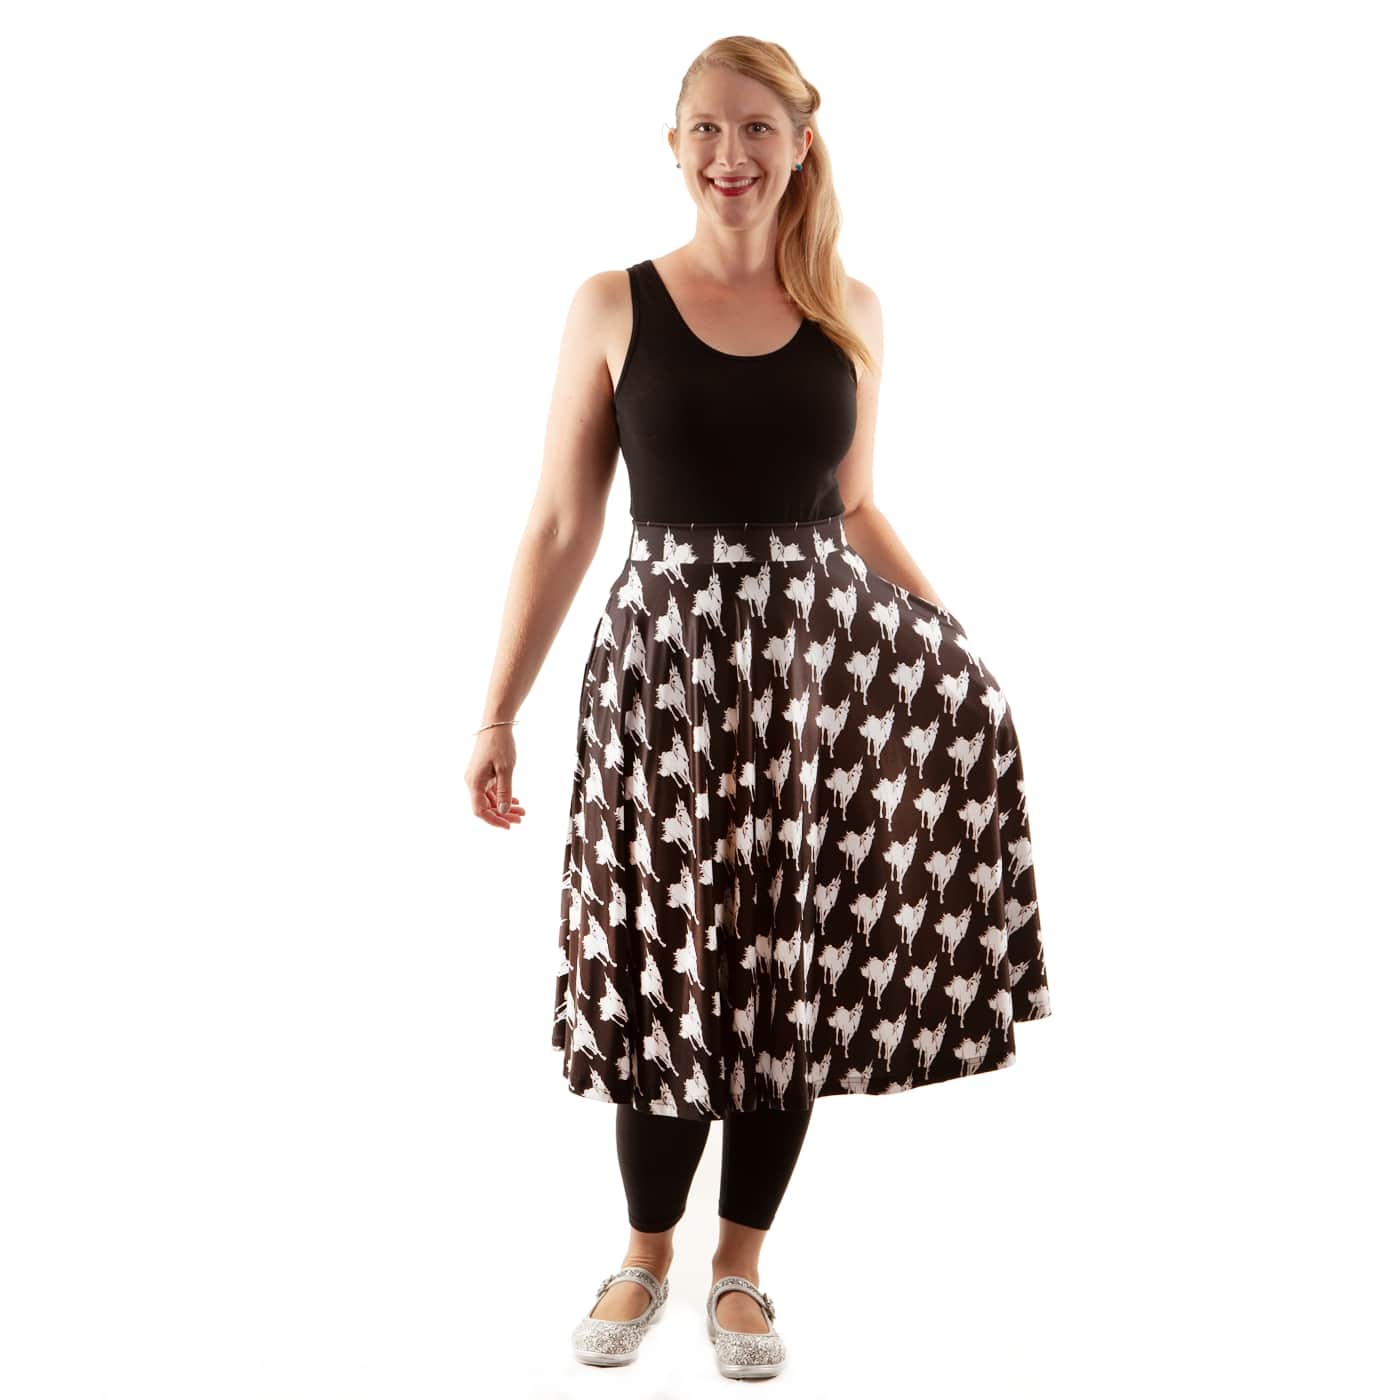 Lulu Swishy Skirt by RainbowsAndFairies.com.au (Unicorn - Black & White - Animal Print - Mythical Creature - Circle Skirt With Pockets - Mod Retro) - SKU: CL_SWISH_LULUU_ORG - Pic-05